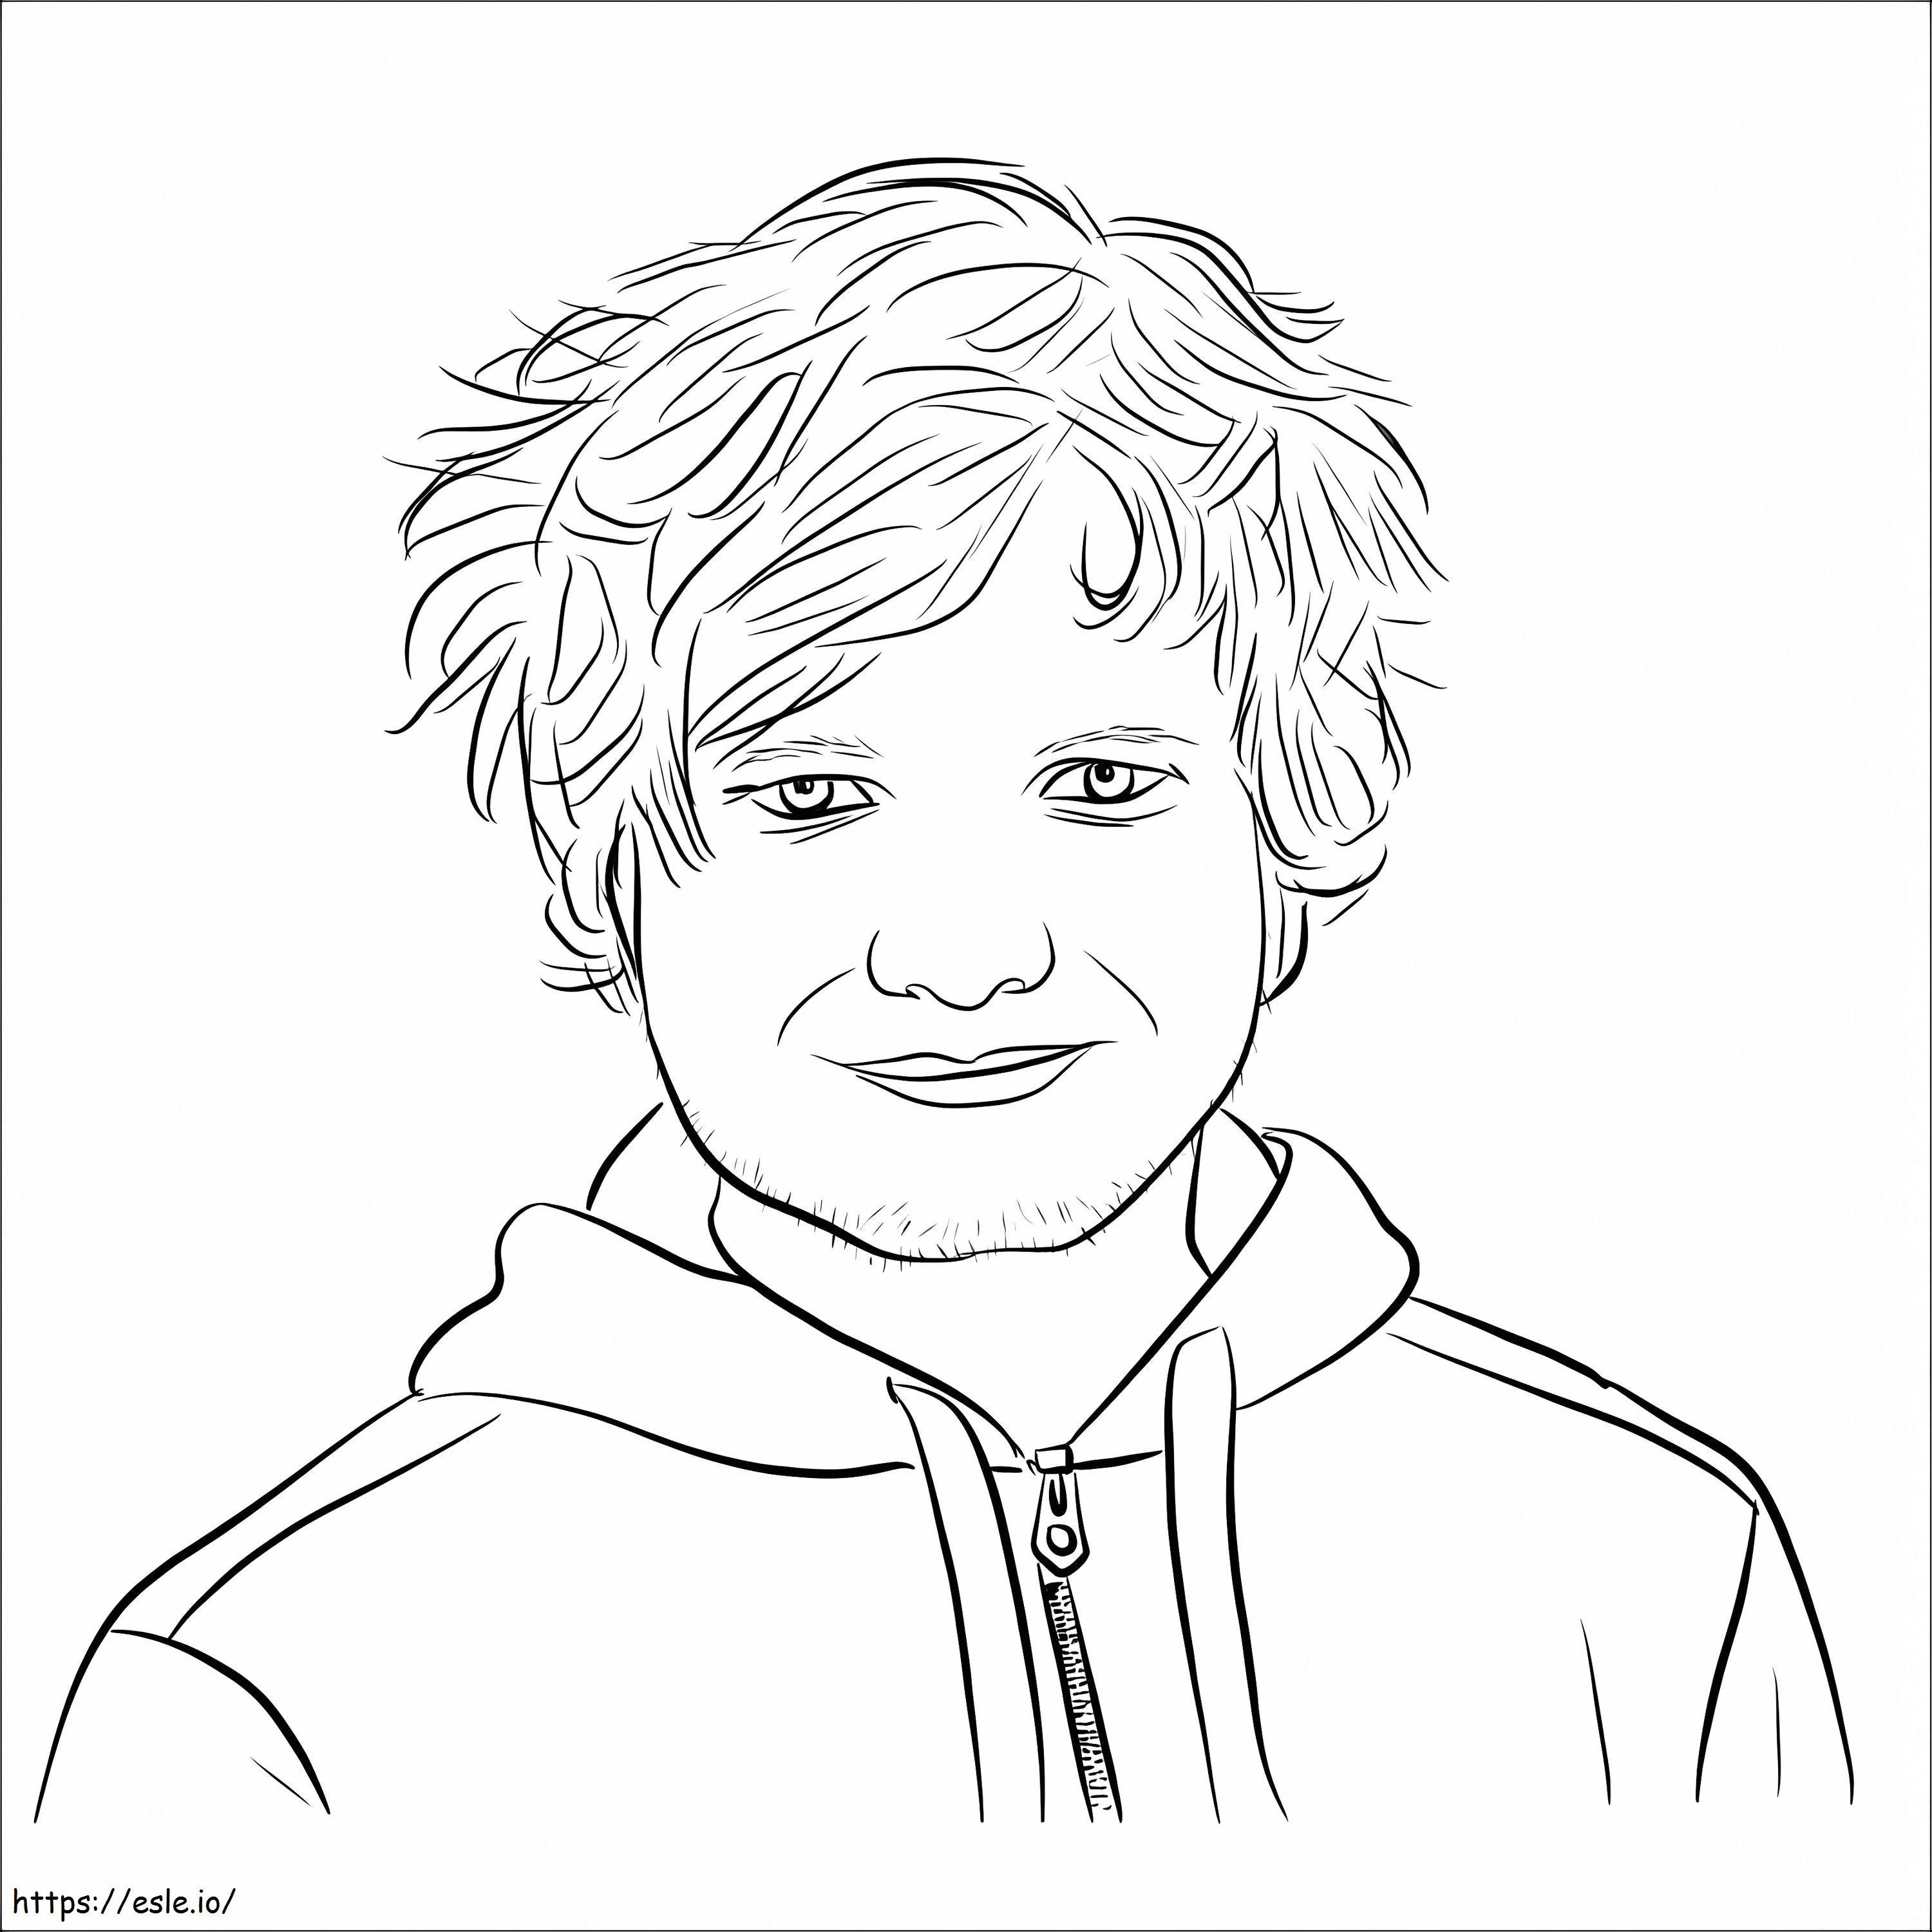 Ed Sheeran imprimible para colorear